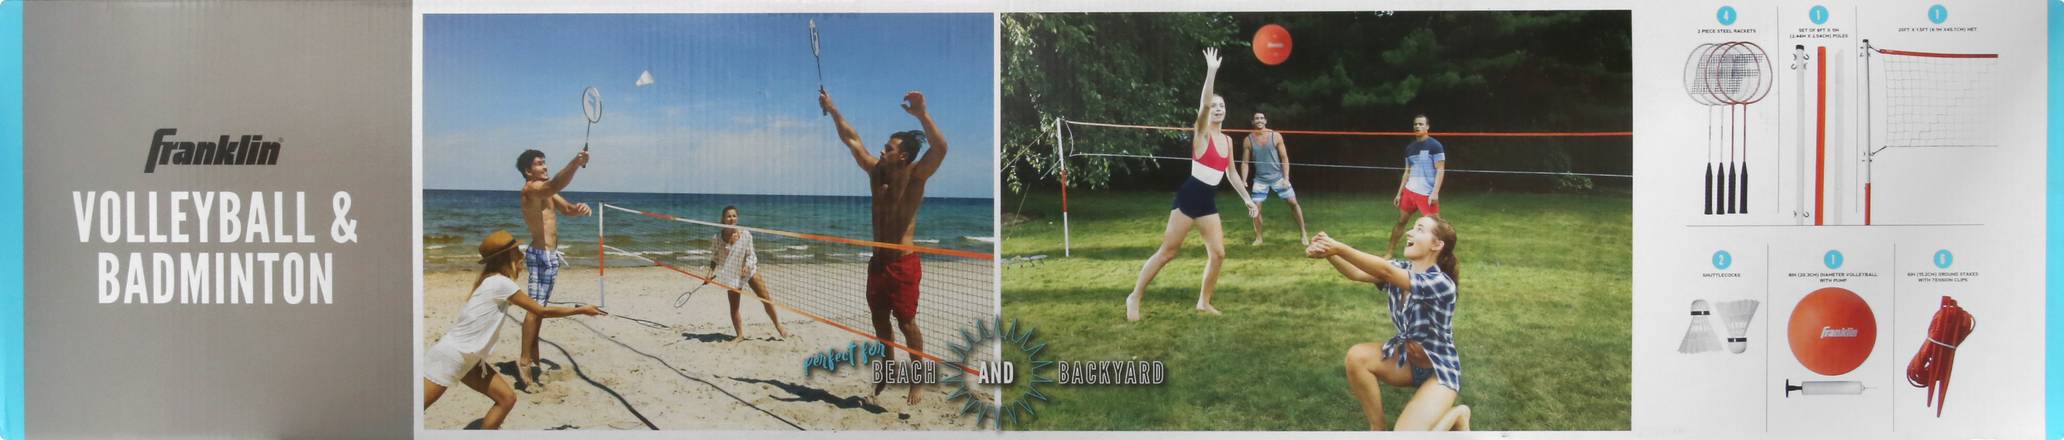 Franklin Volleyball & Badminton (1 set)